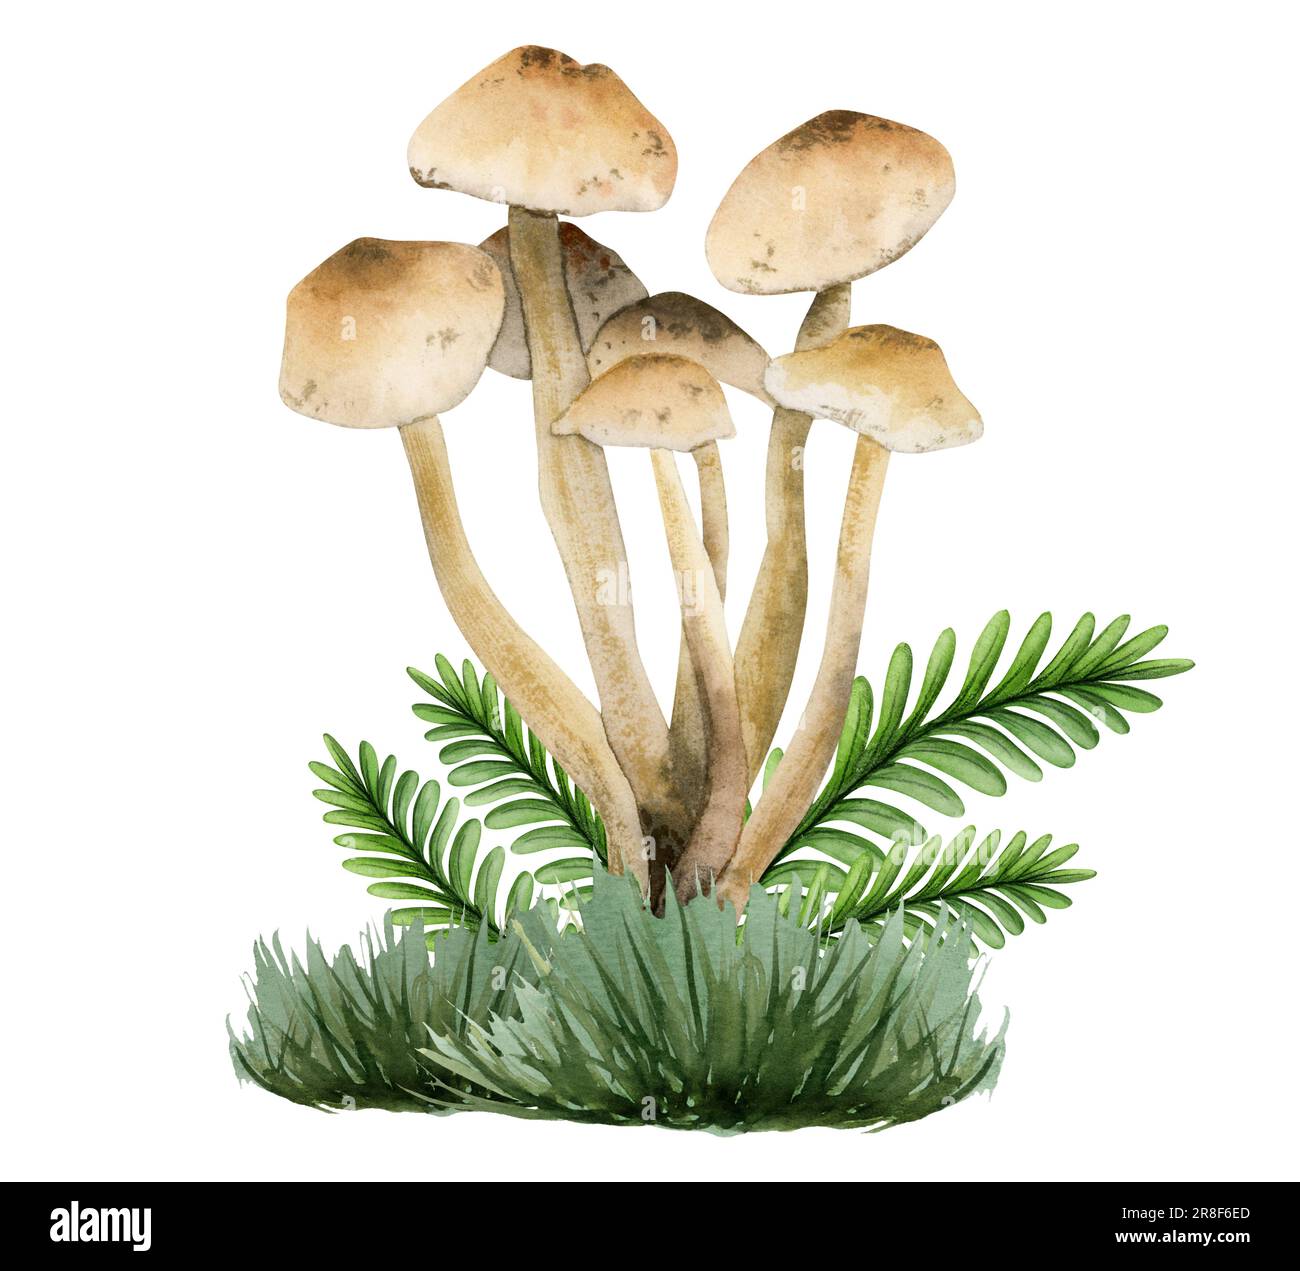 Marasmius oreades light brown edible mushroom in grass and leaves illustration. Hand drawn watercolor champignon Stock Photo